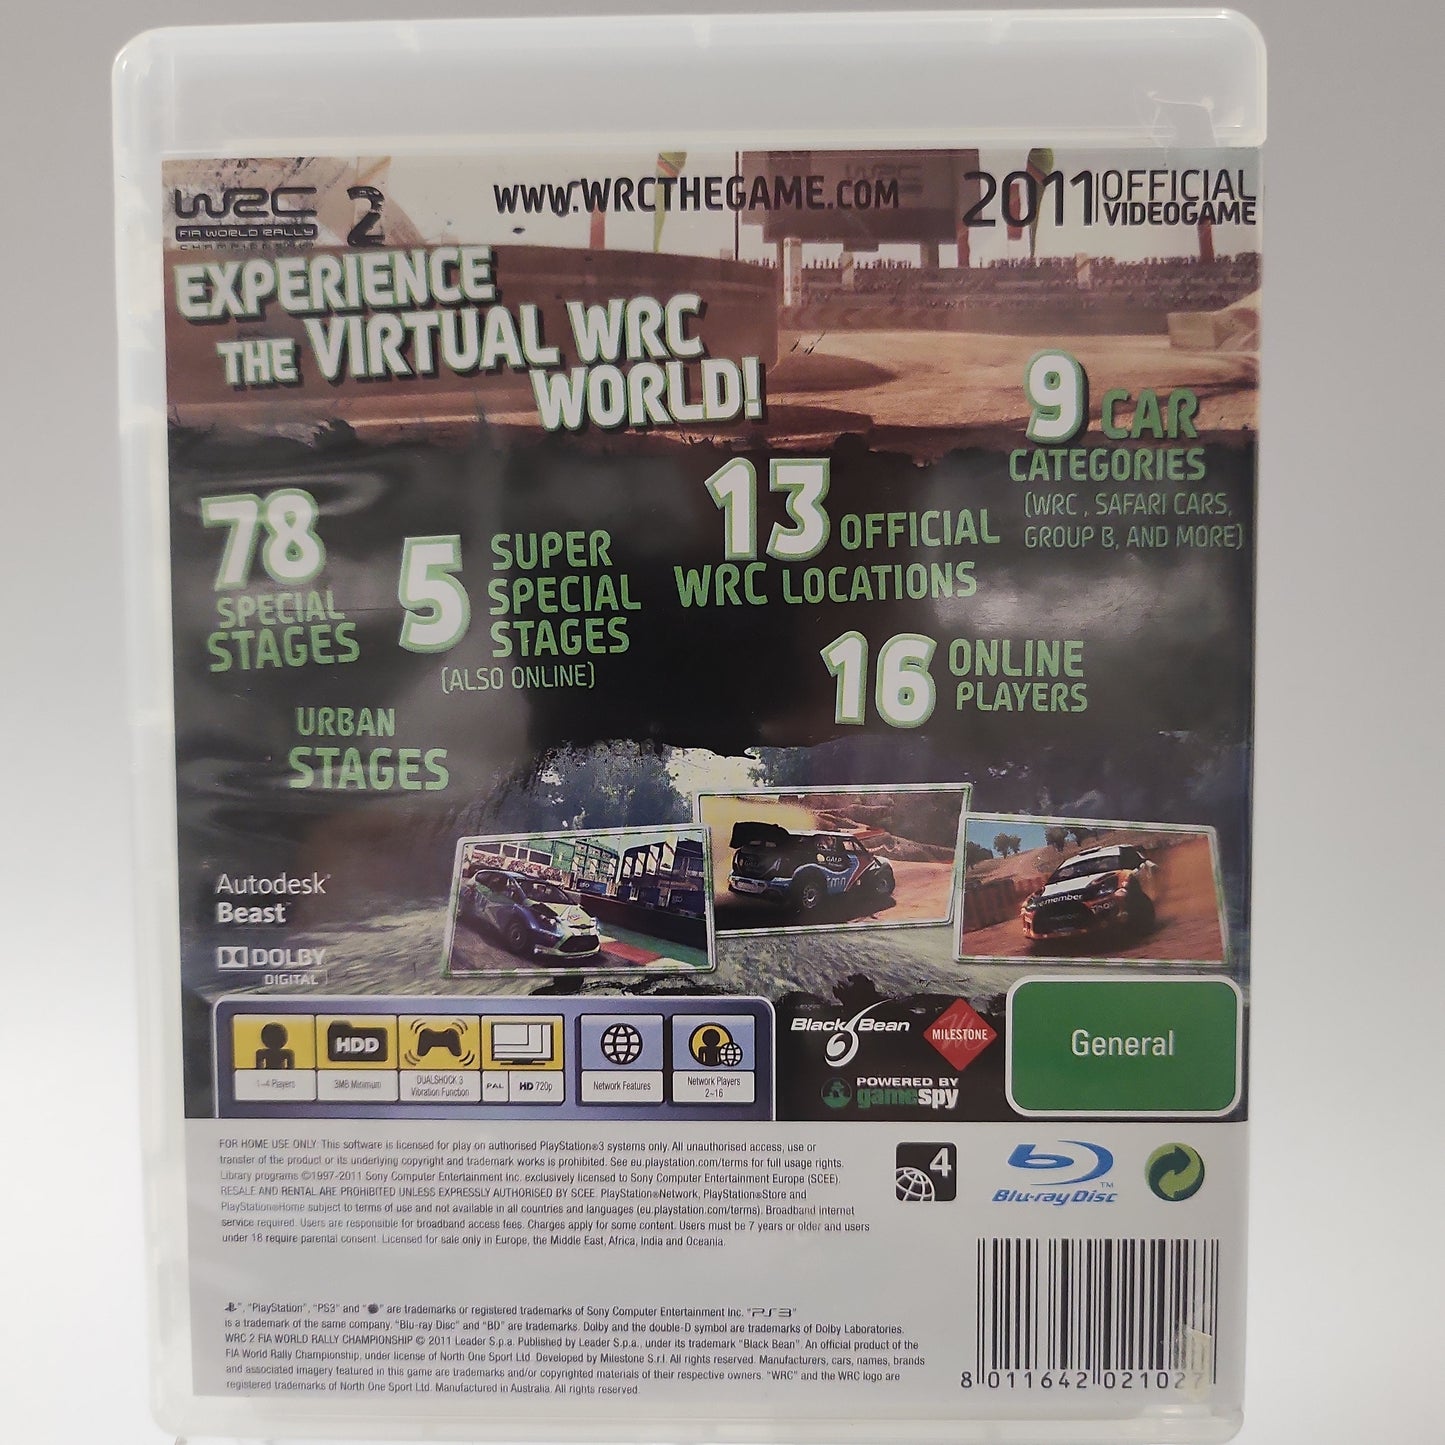 WRC 2 Fia World Rally Championship Australian Cover PS3